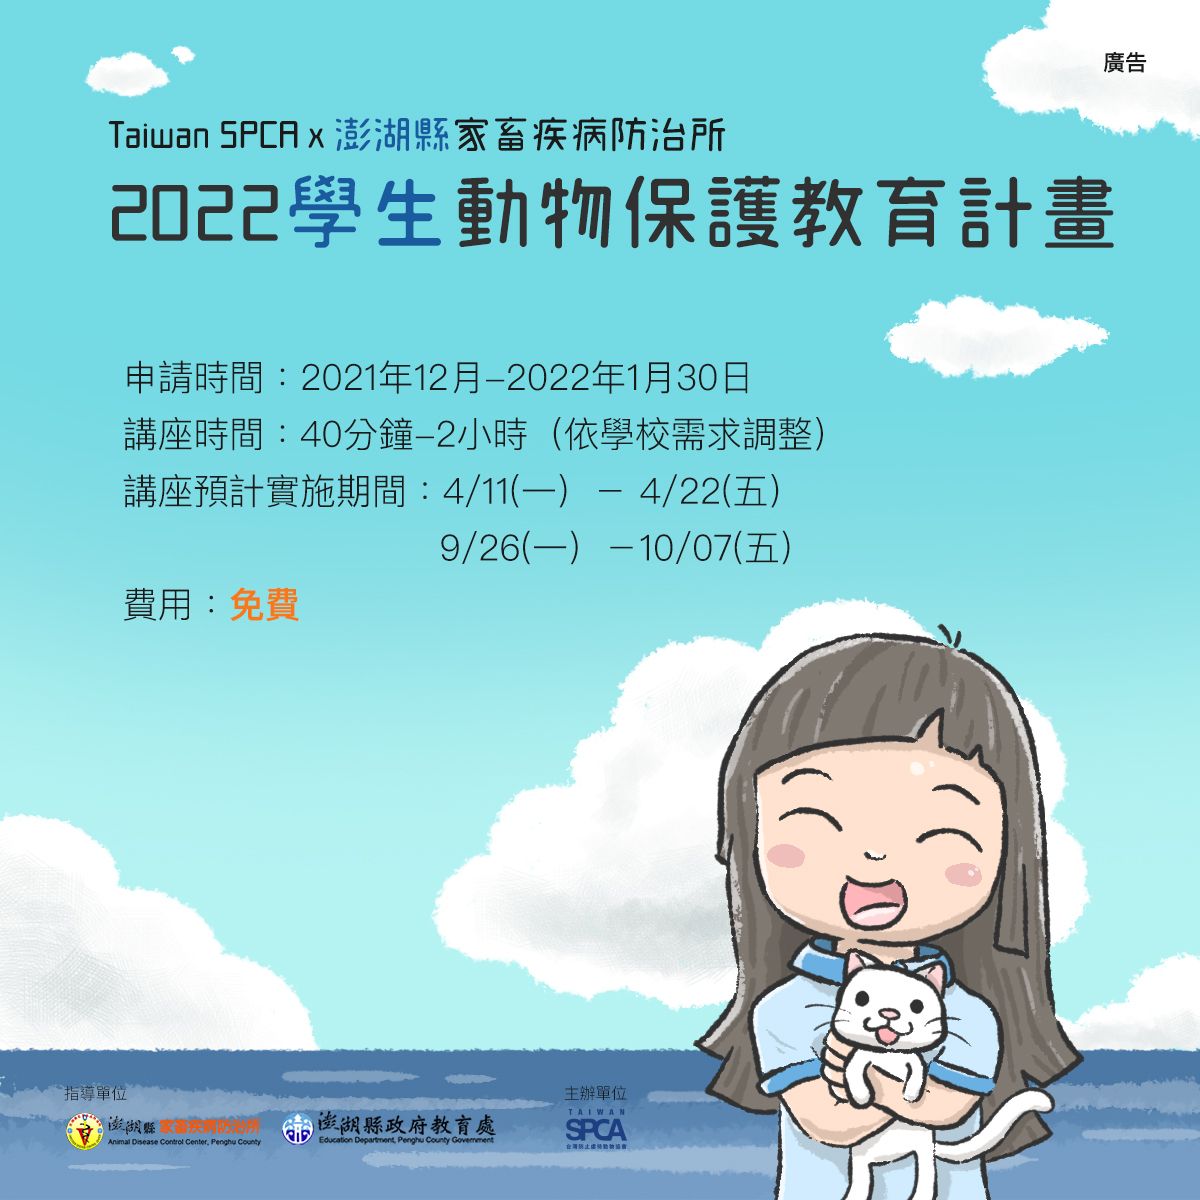 【Taiwan SPCA x 澎湖縣防治所  2022「學生」動物保護教育計畫 開放報名啦！】